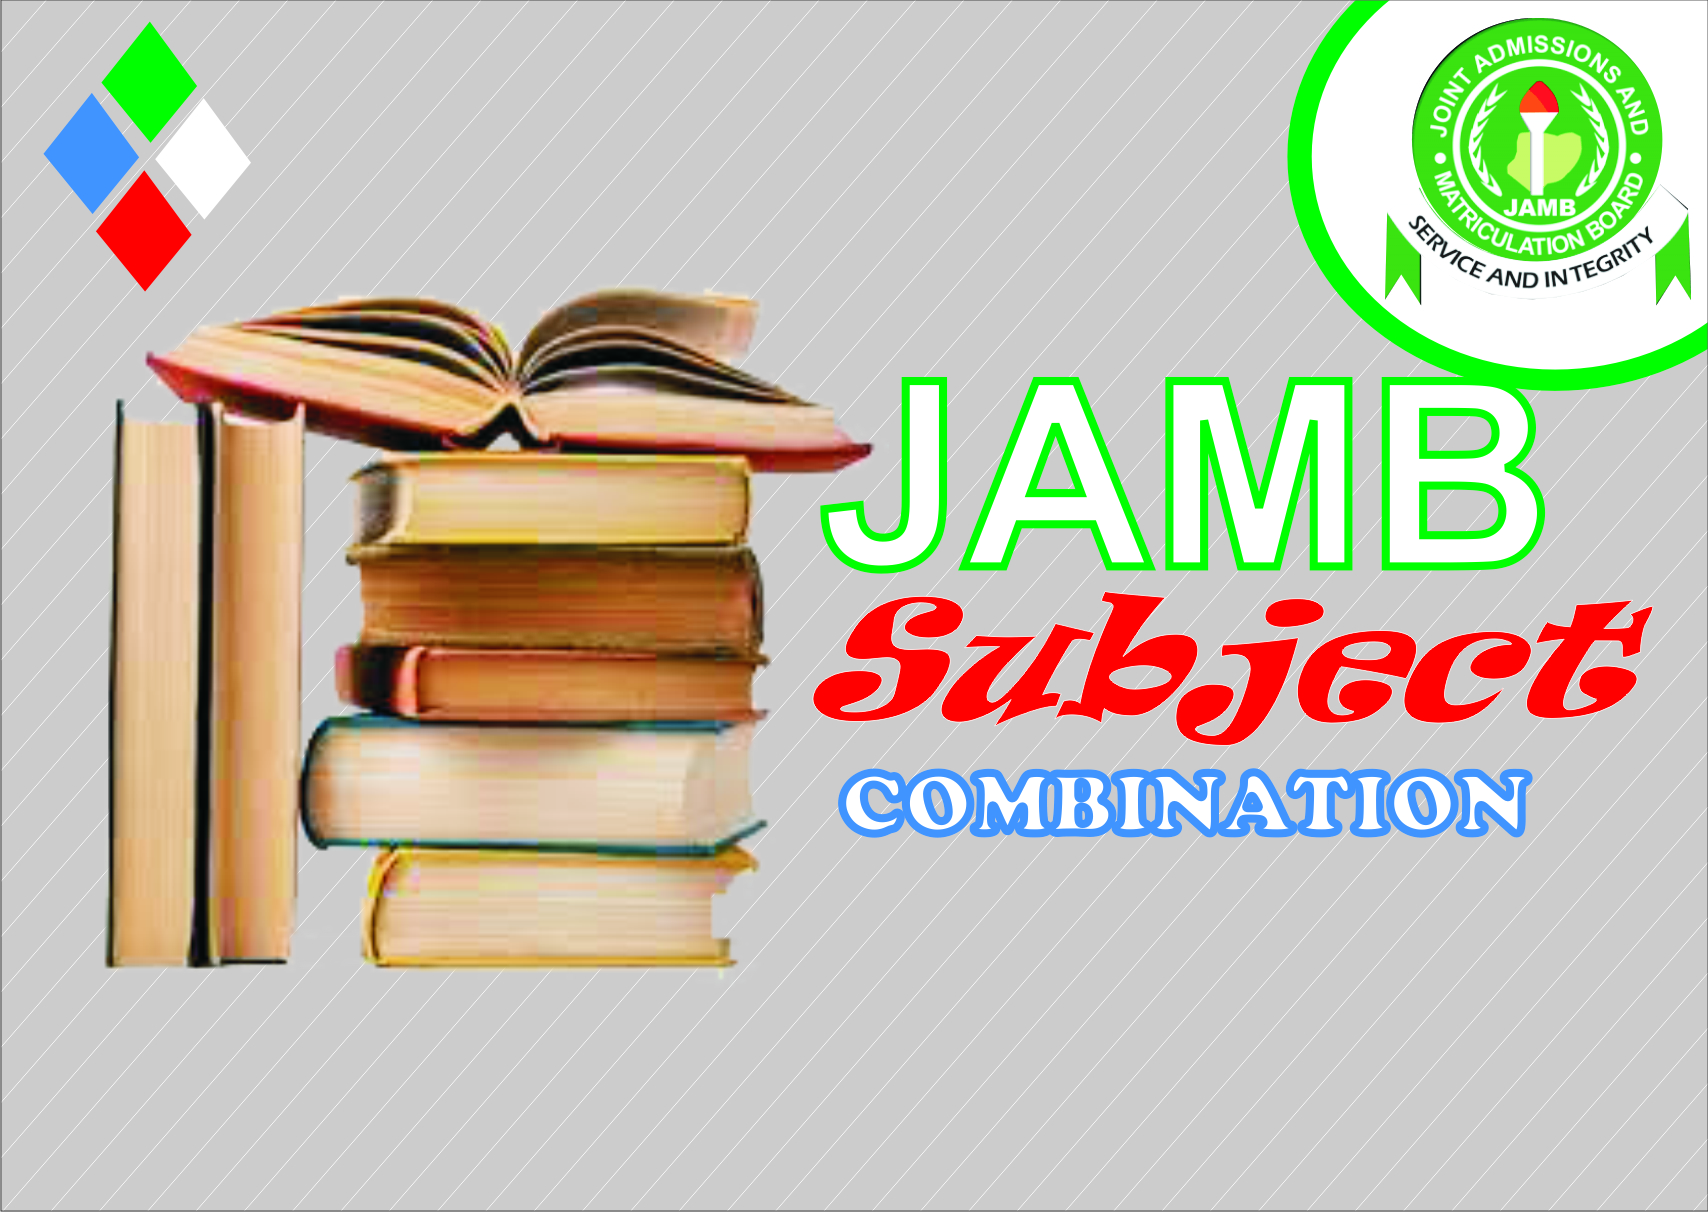 JAMB SUBJECT COMBINATION